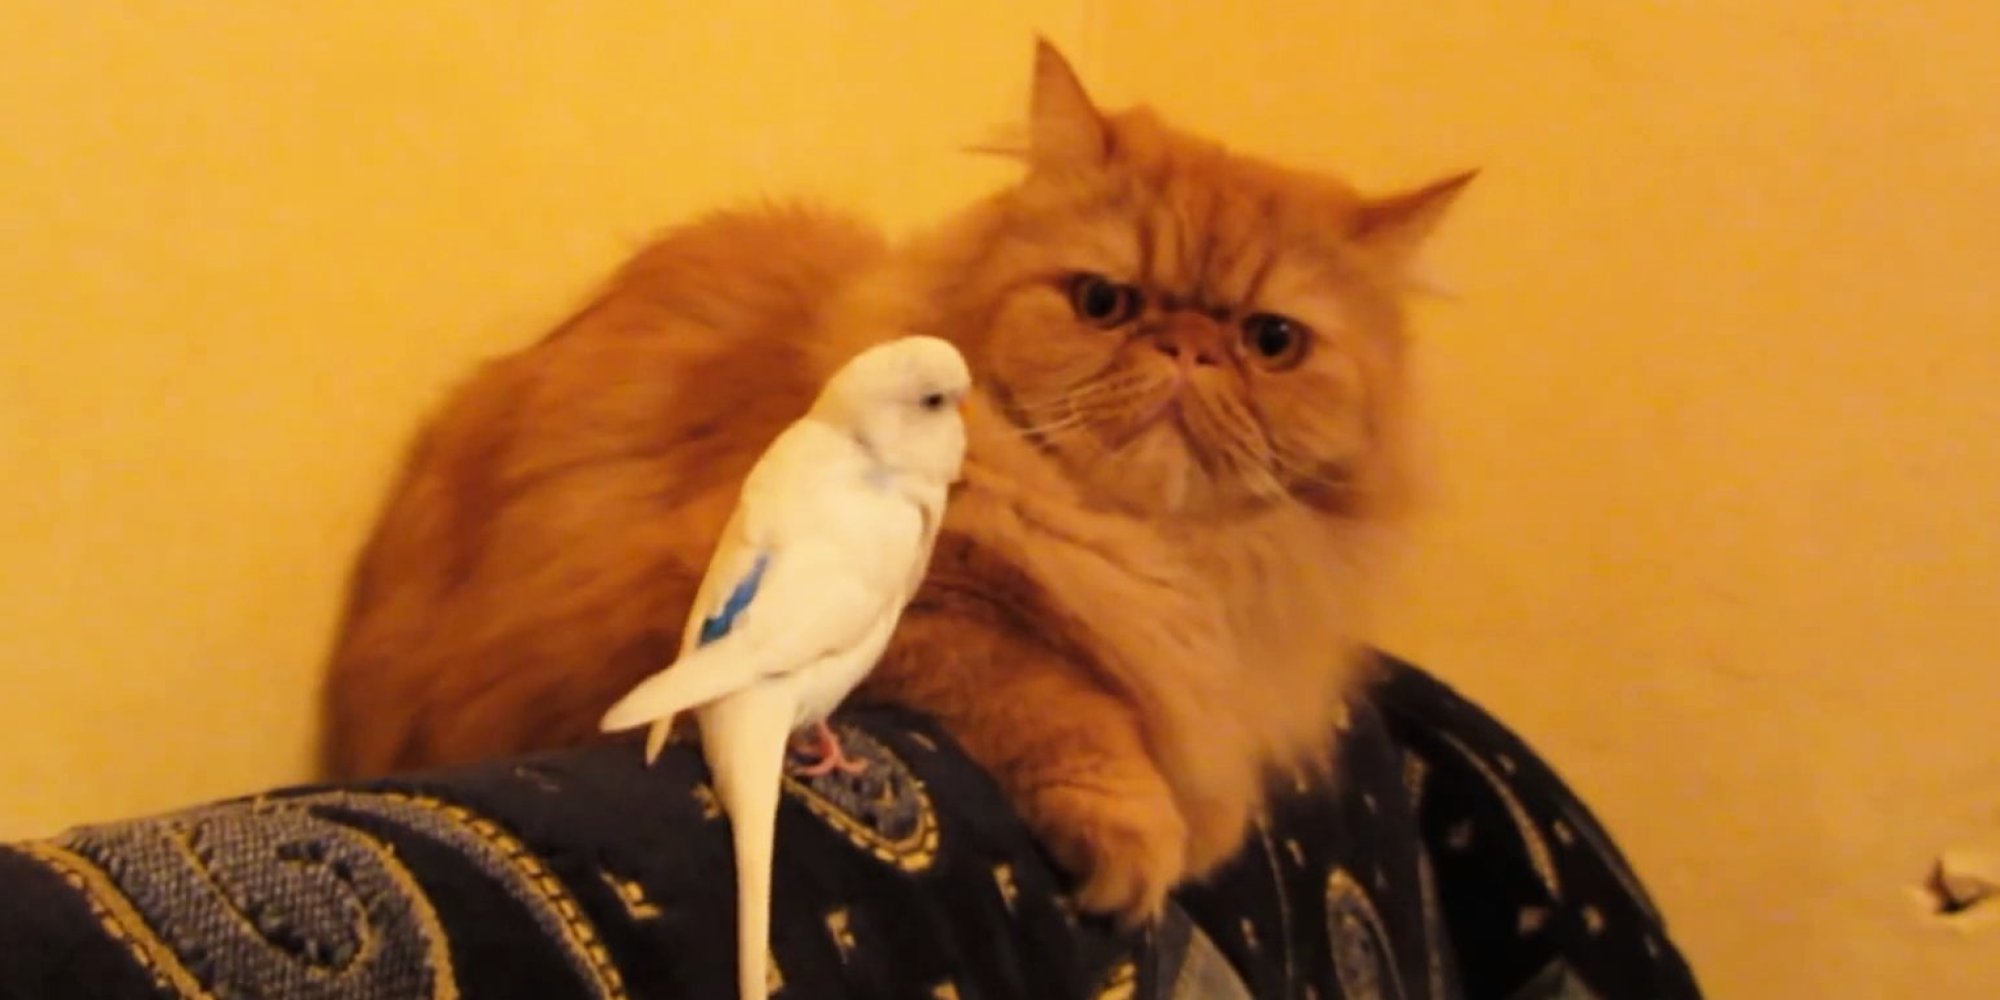 o-BIRDS-ANNOYING-CATS-facebook.jpg